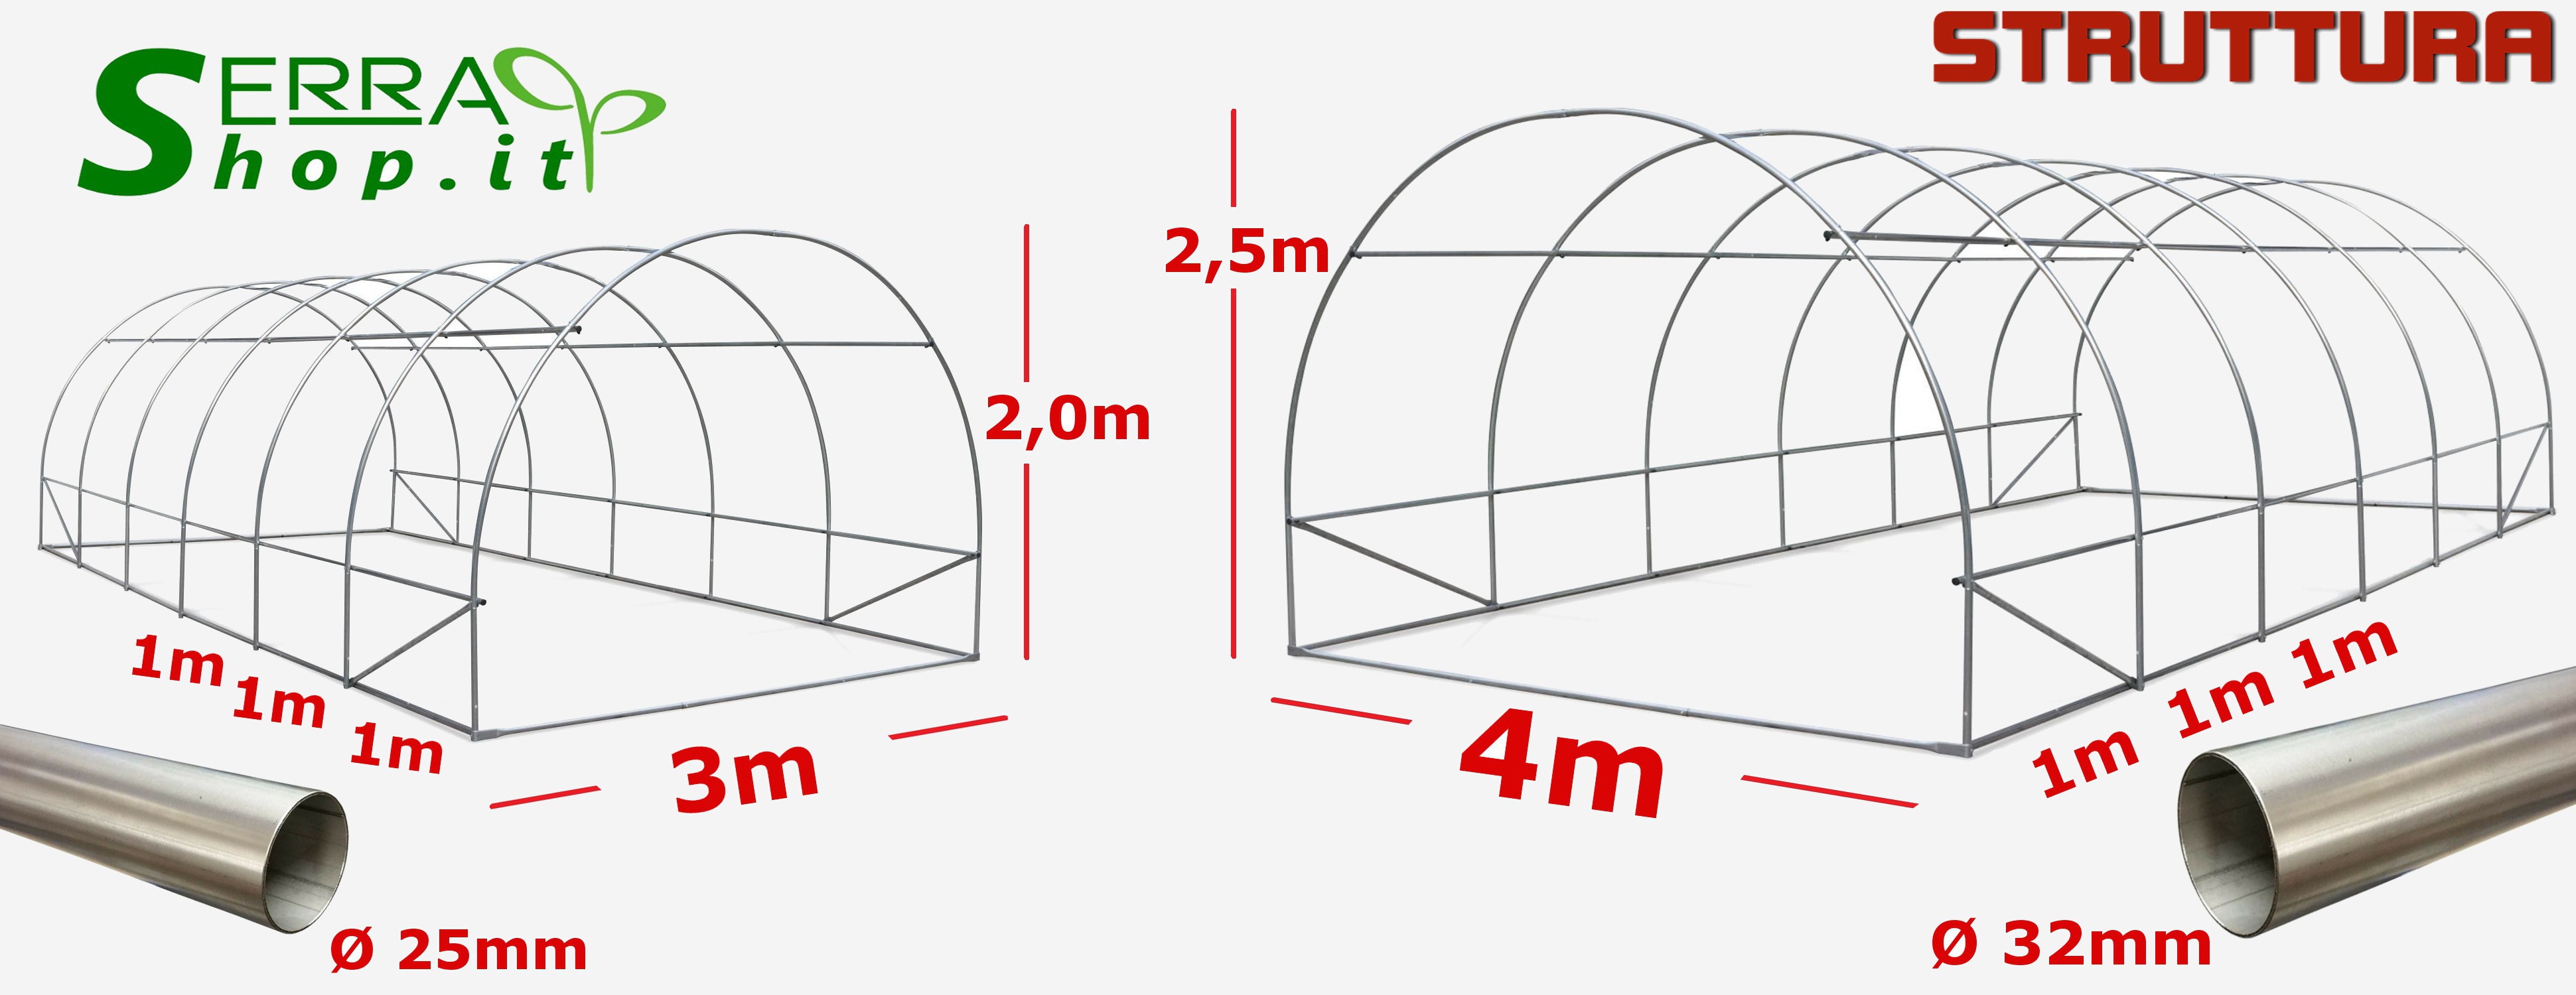 serra tunnel arco policarbonato 4mm compact serrashop